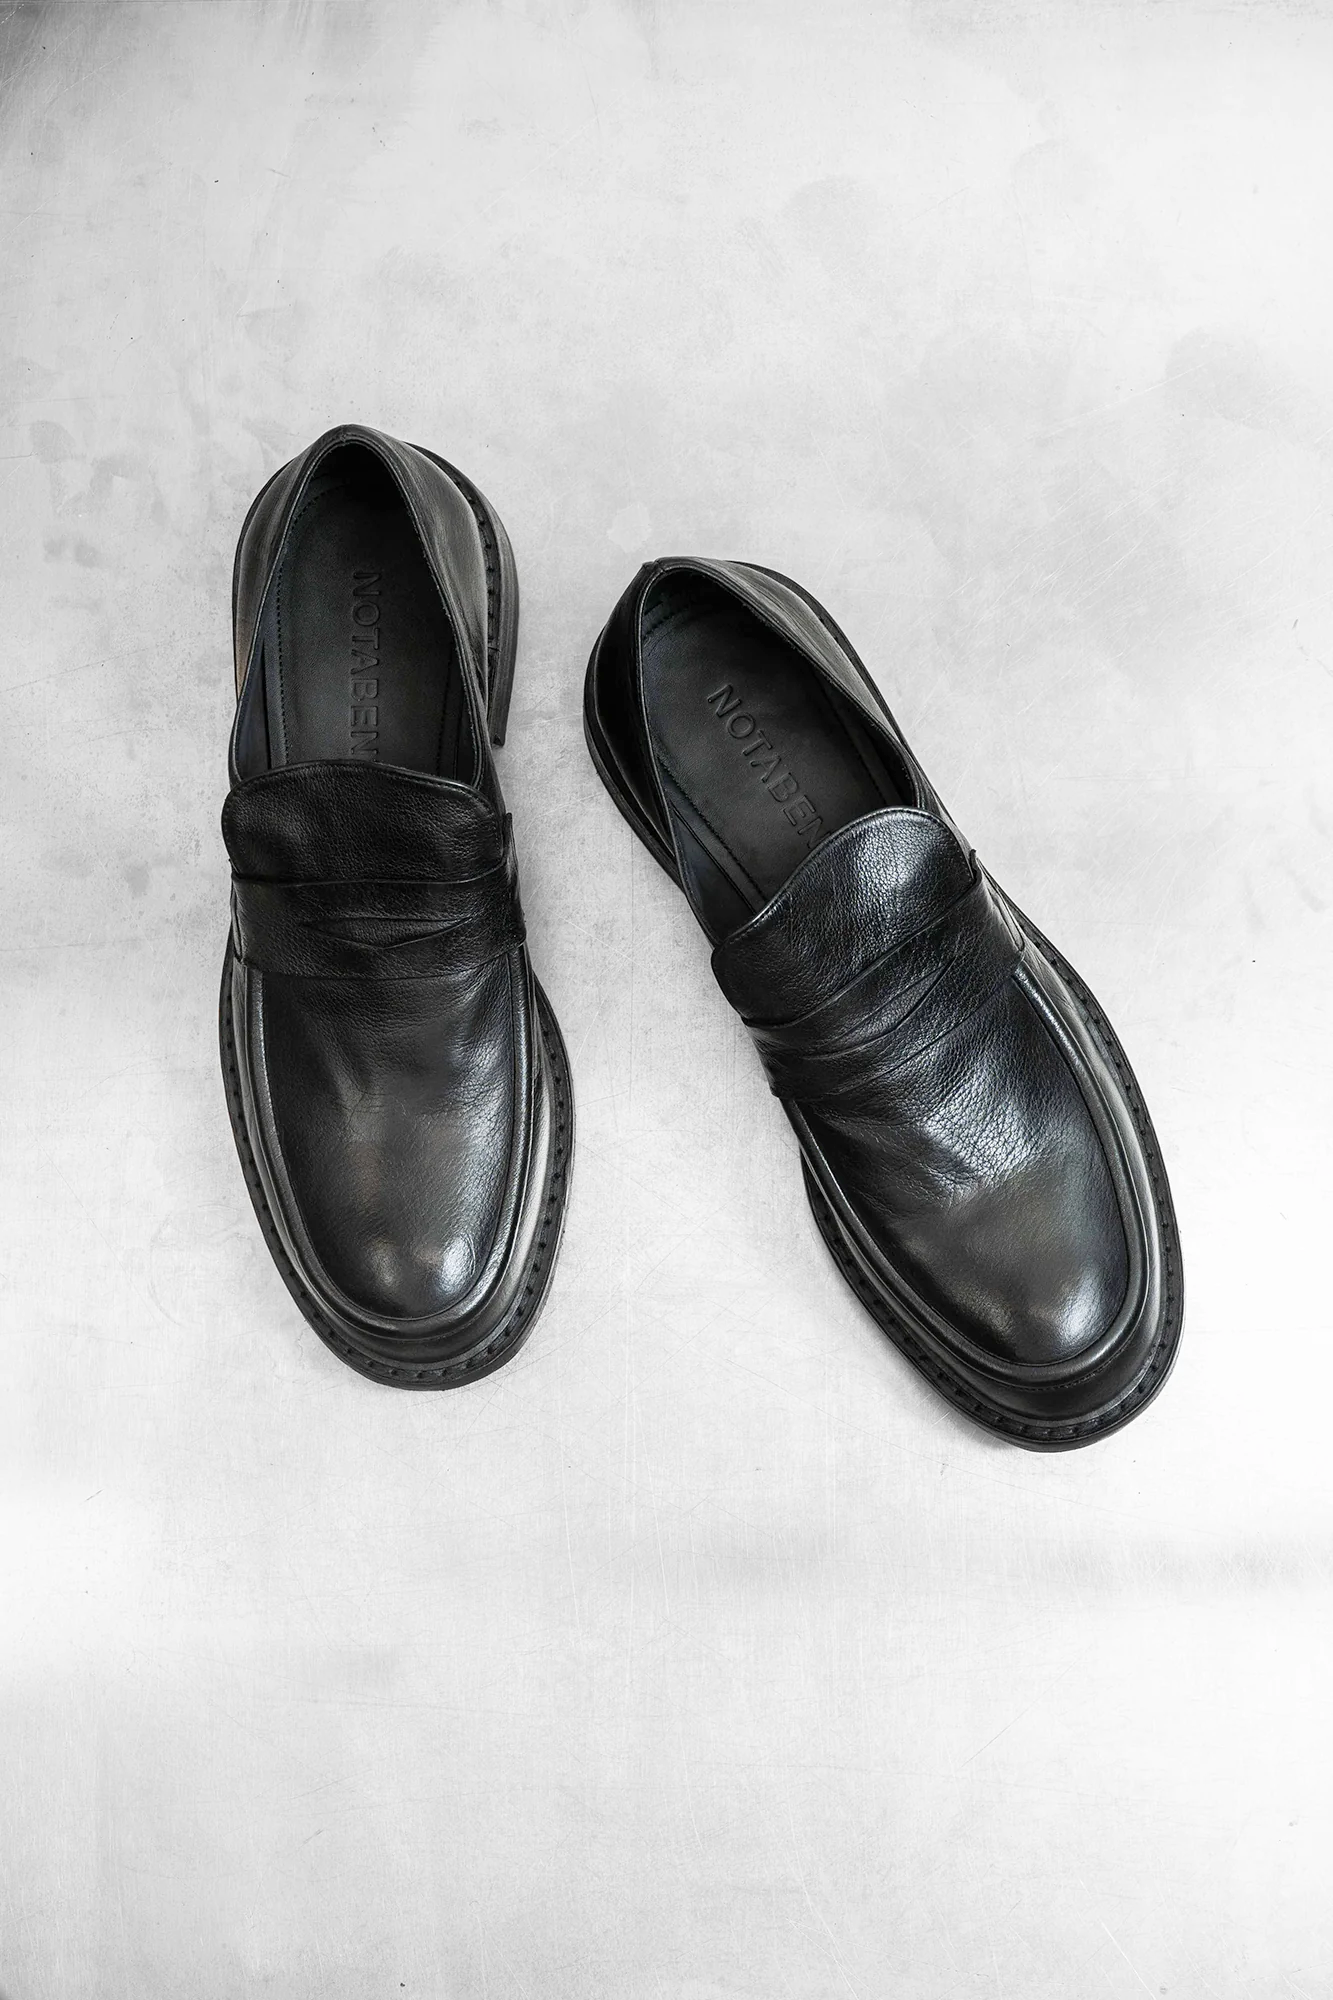 Filippo loafers, sort læder